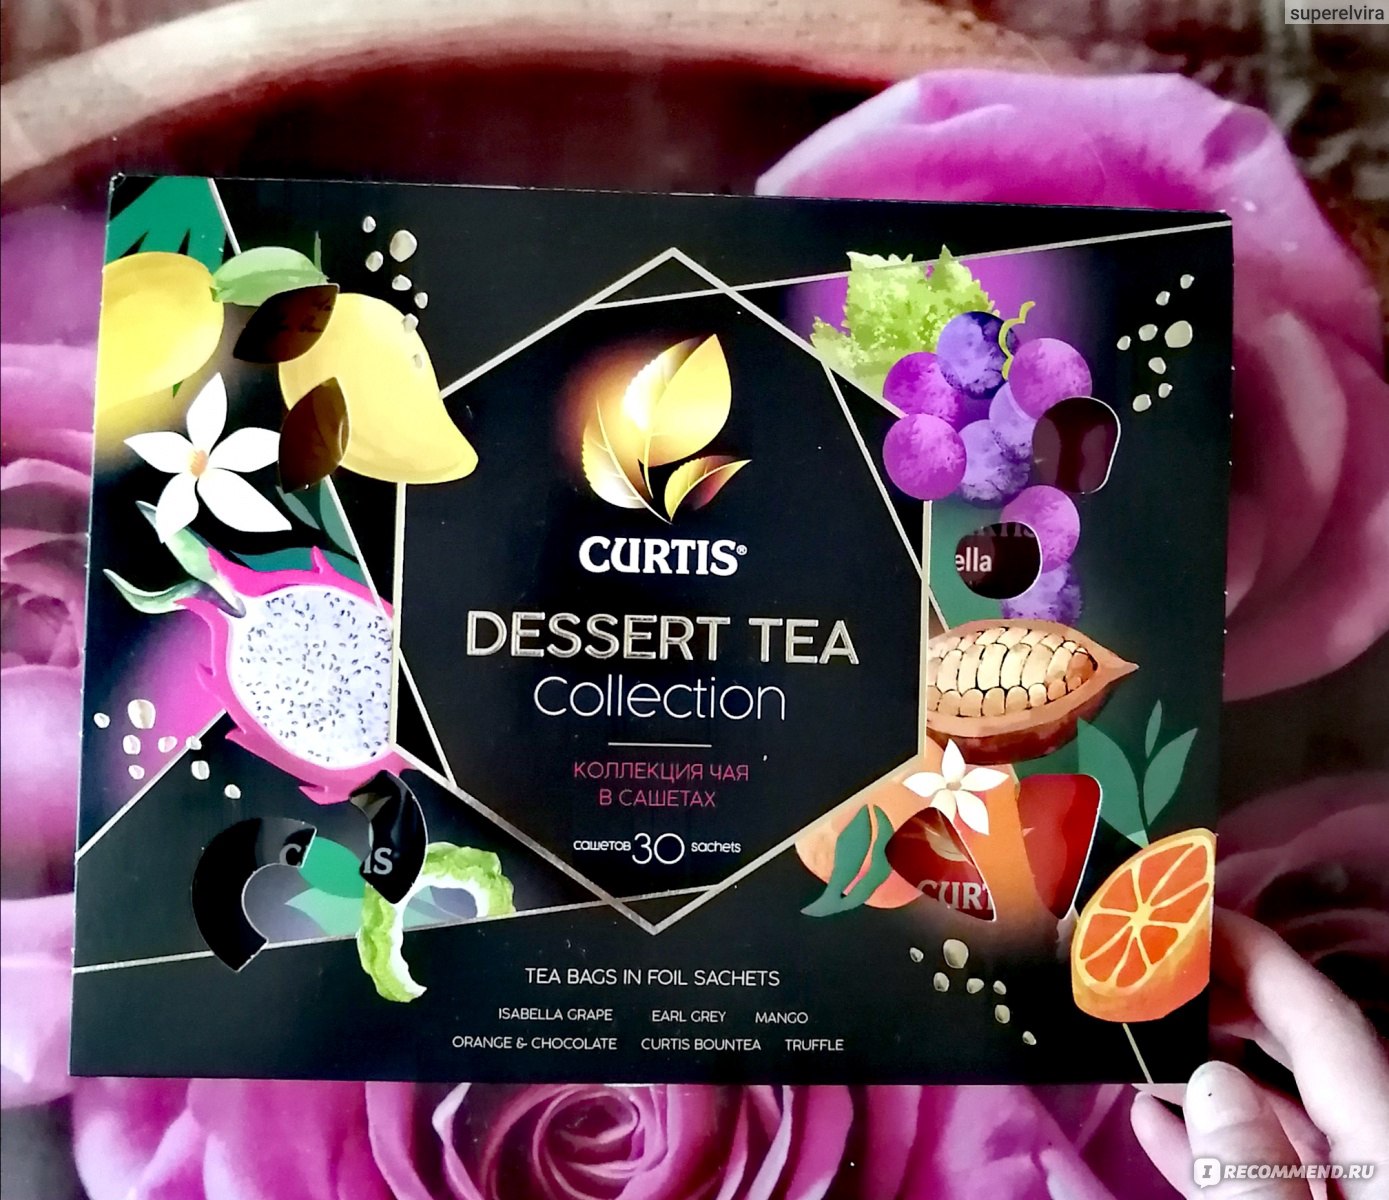 Набор Curtis Dessert Tea collection